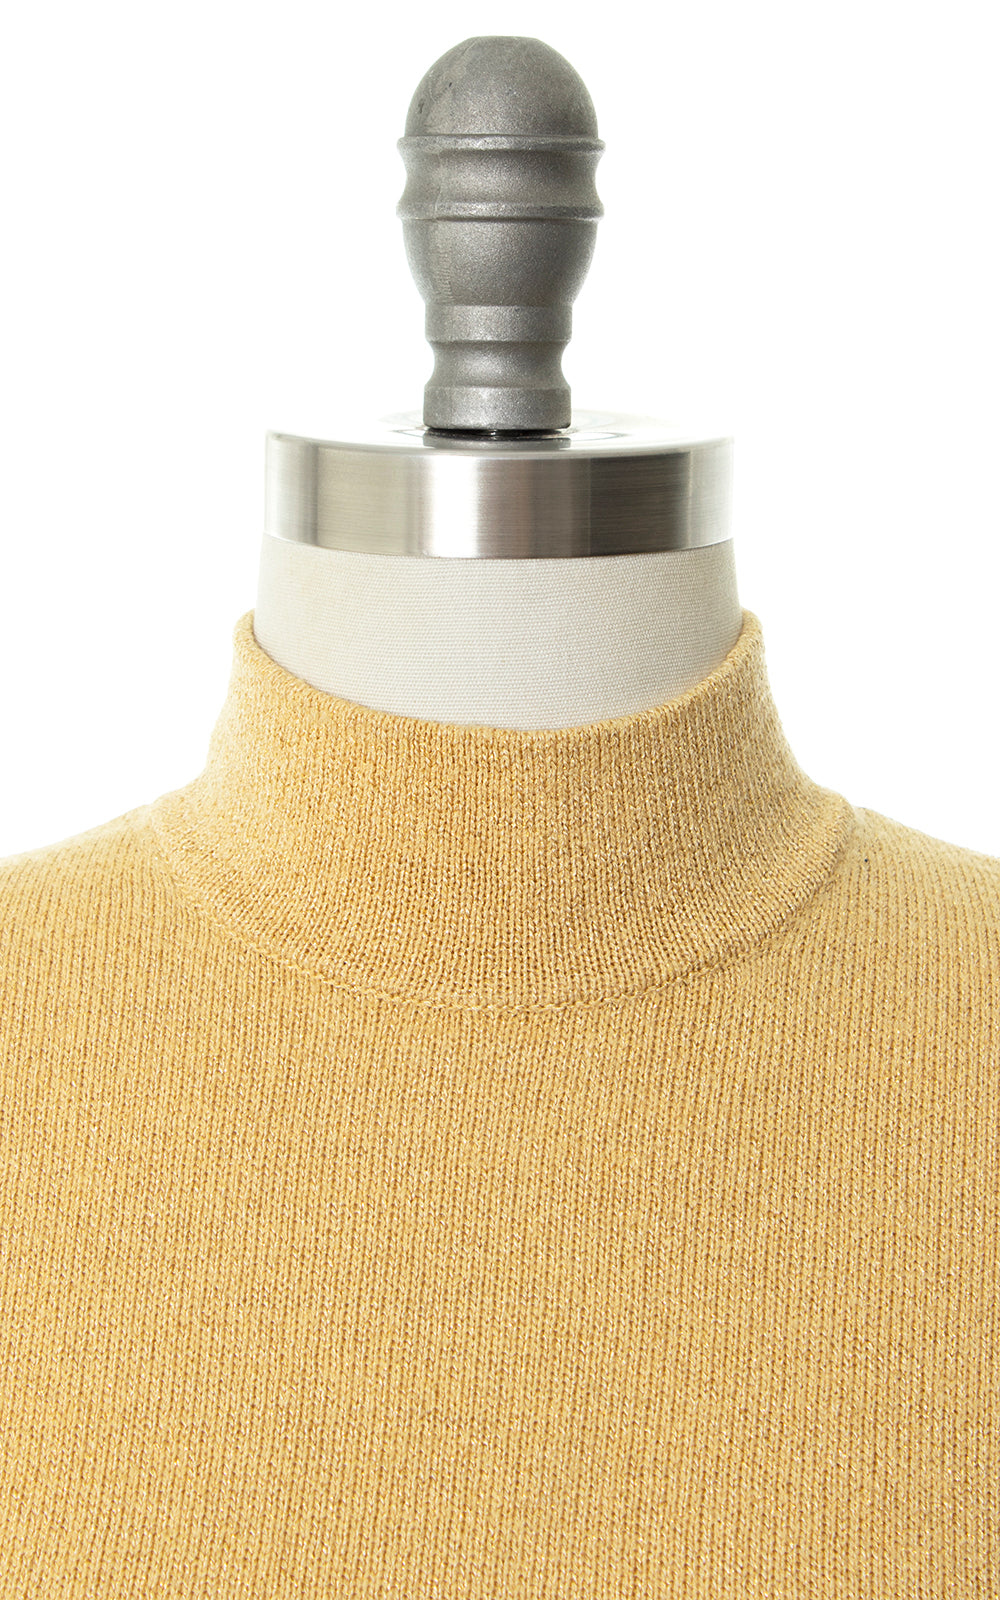 Vintage 1980s 80s ST. JOHN Metallic Gold Knit Mock Neck Sweater Top Birthday Life Vintage